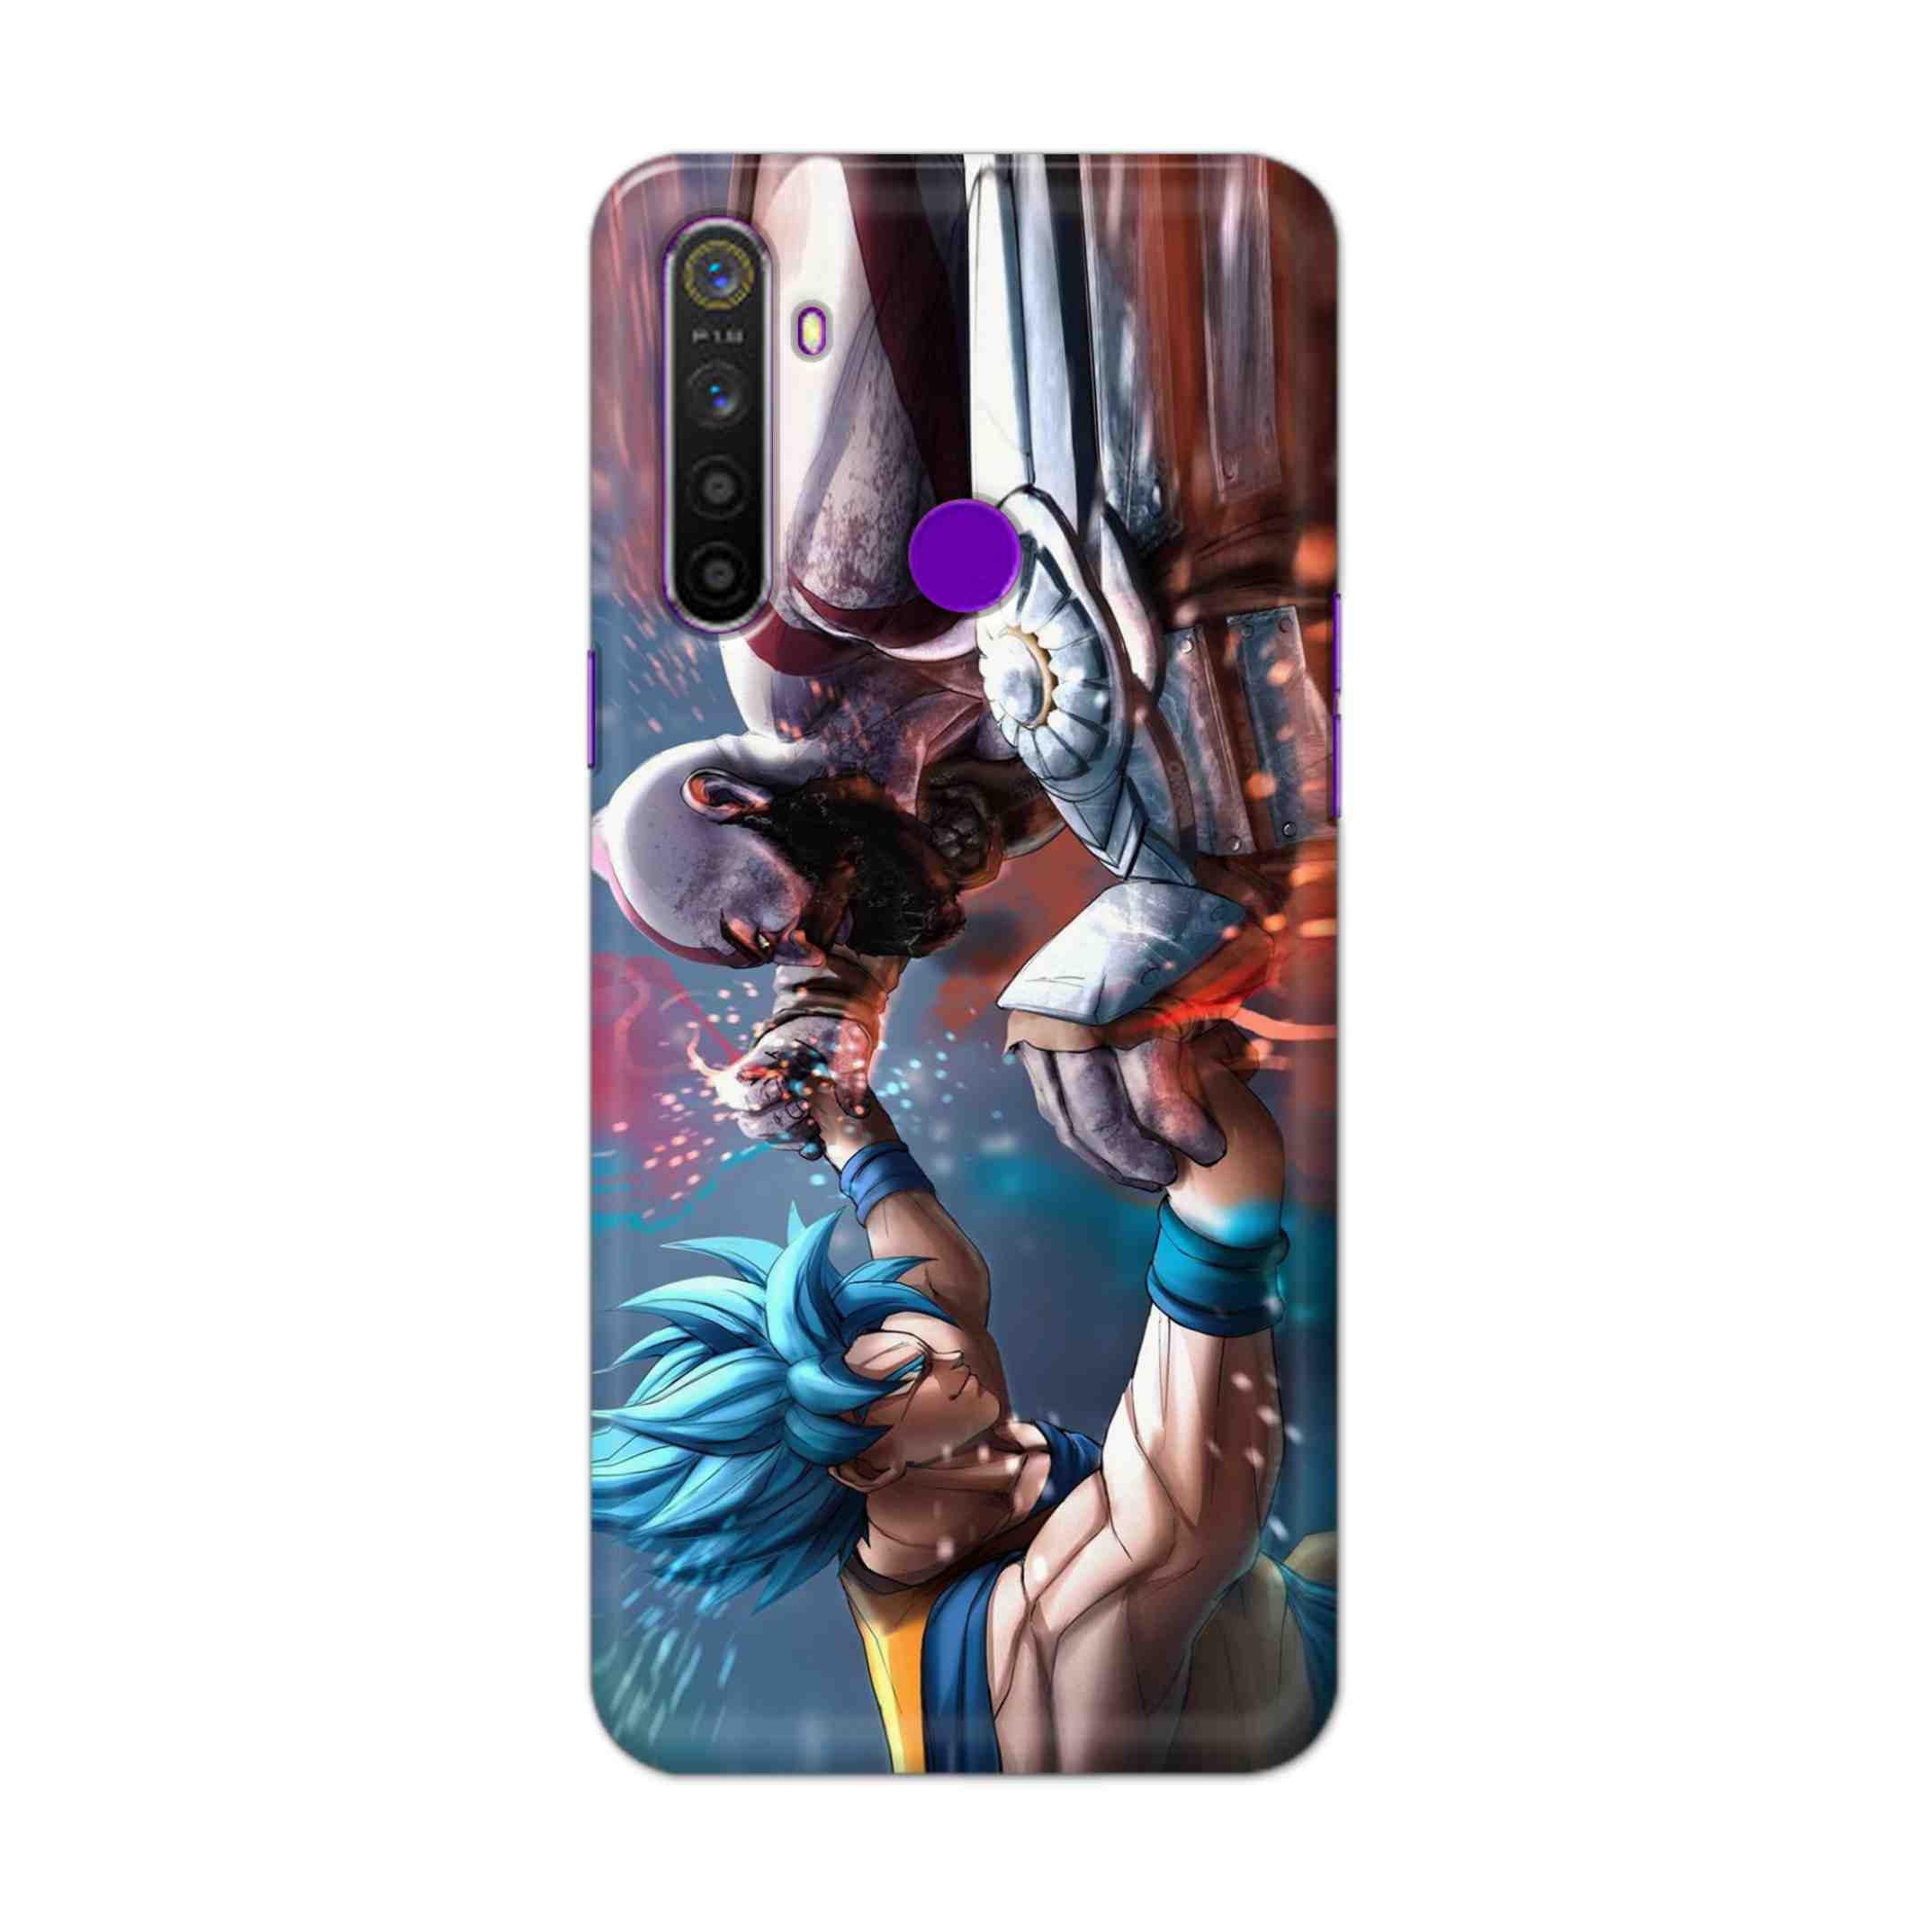 Buy Goku Vs Kratos Hard Back Mobile Phone Case Cover For Realme 5 Online